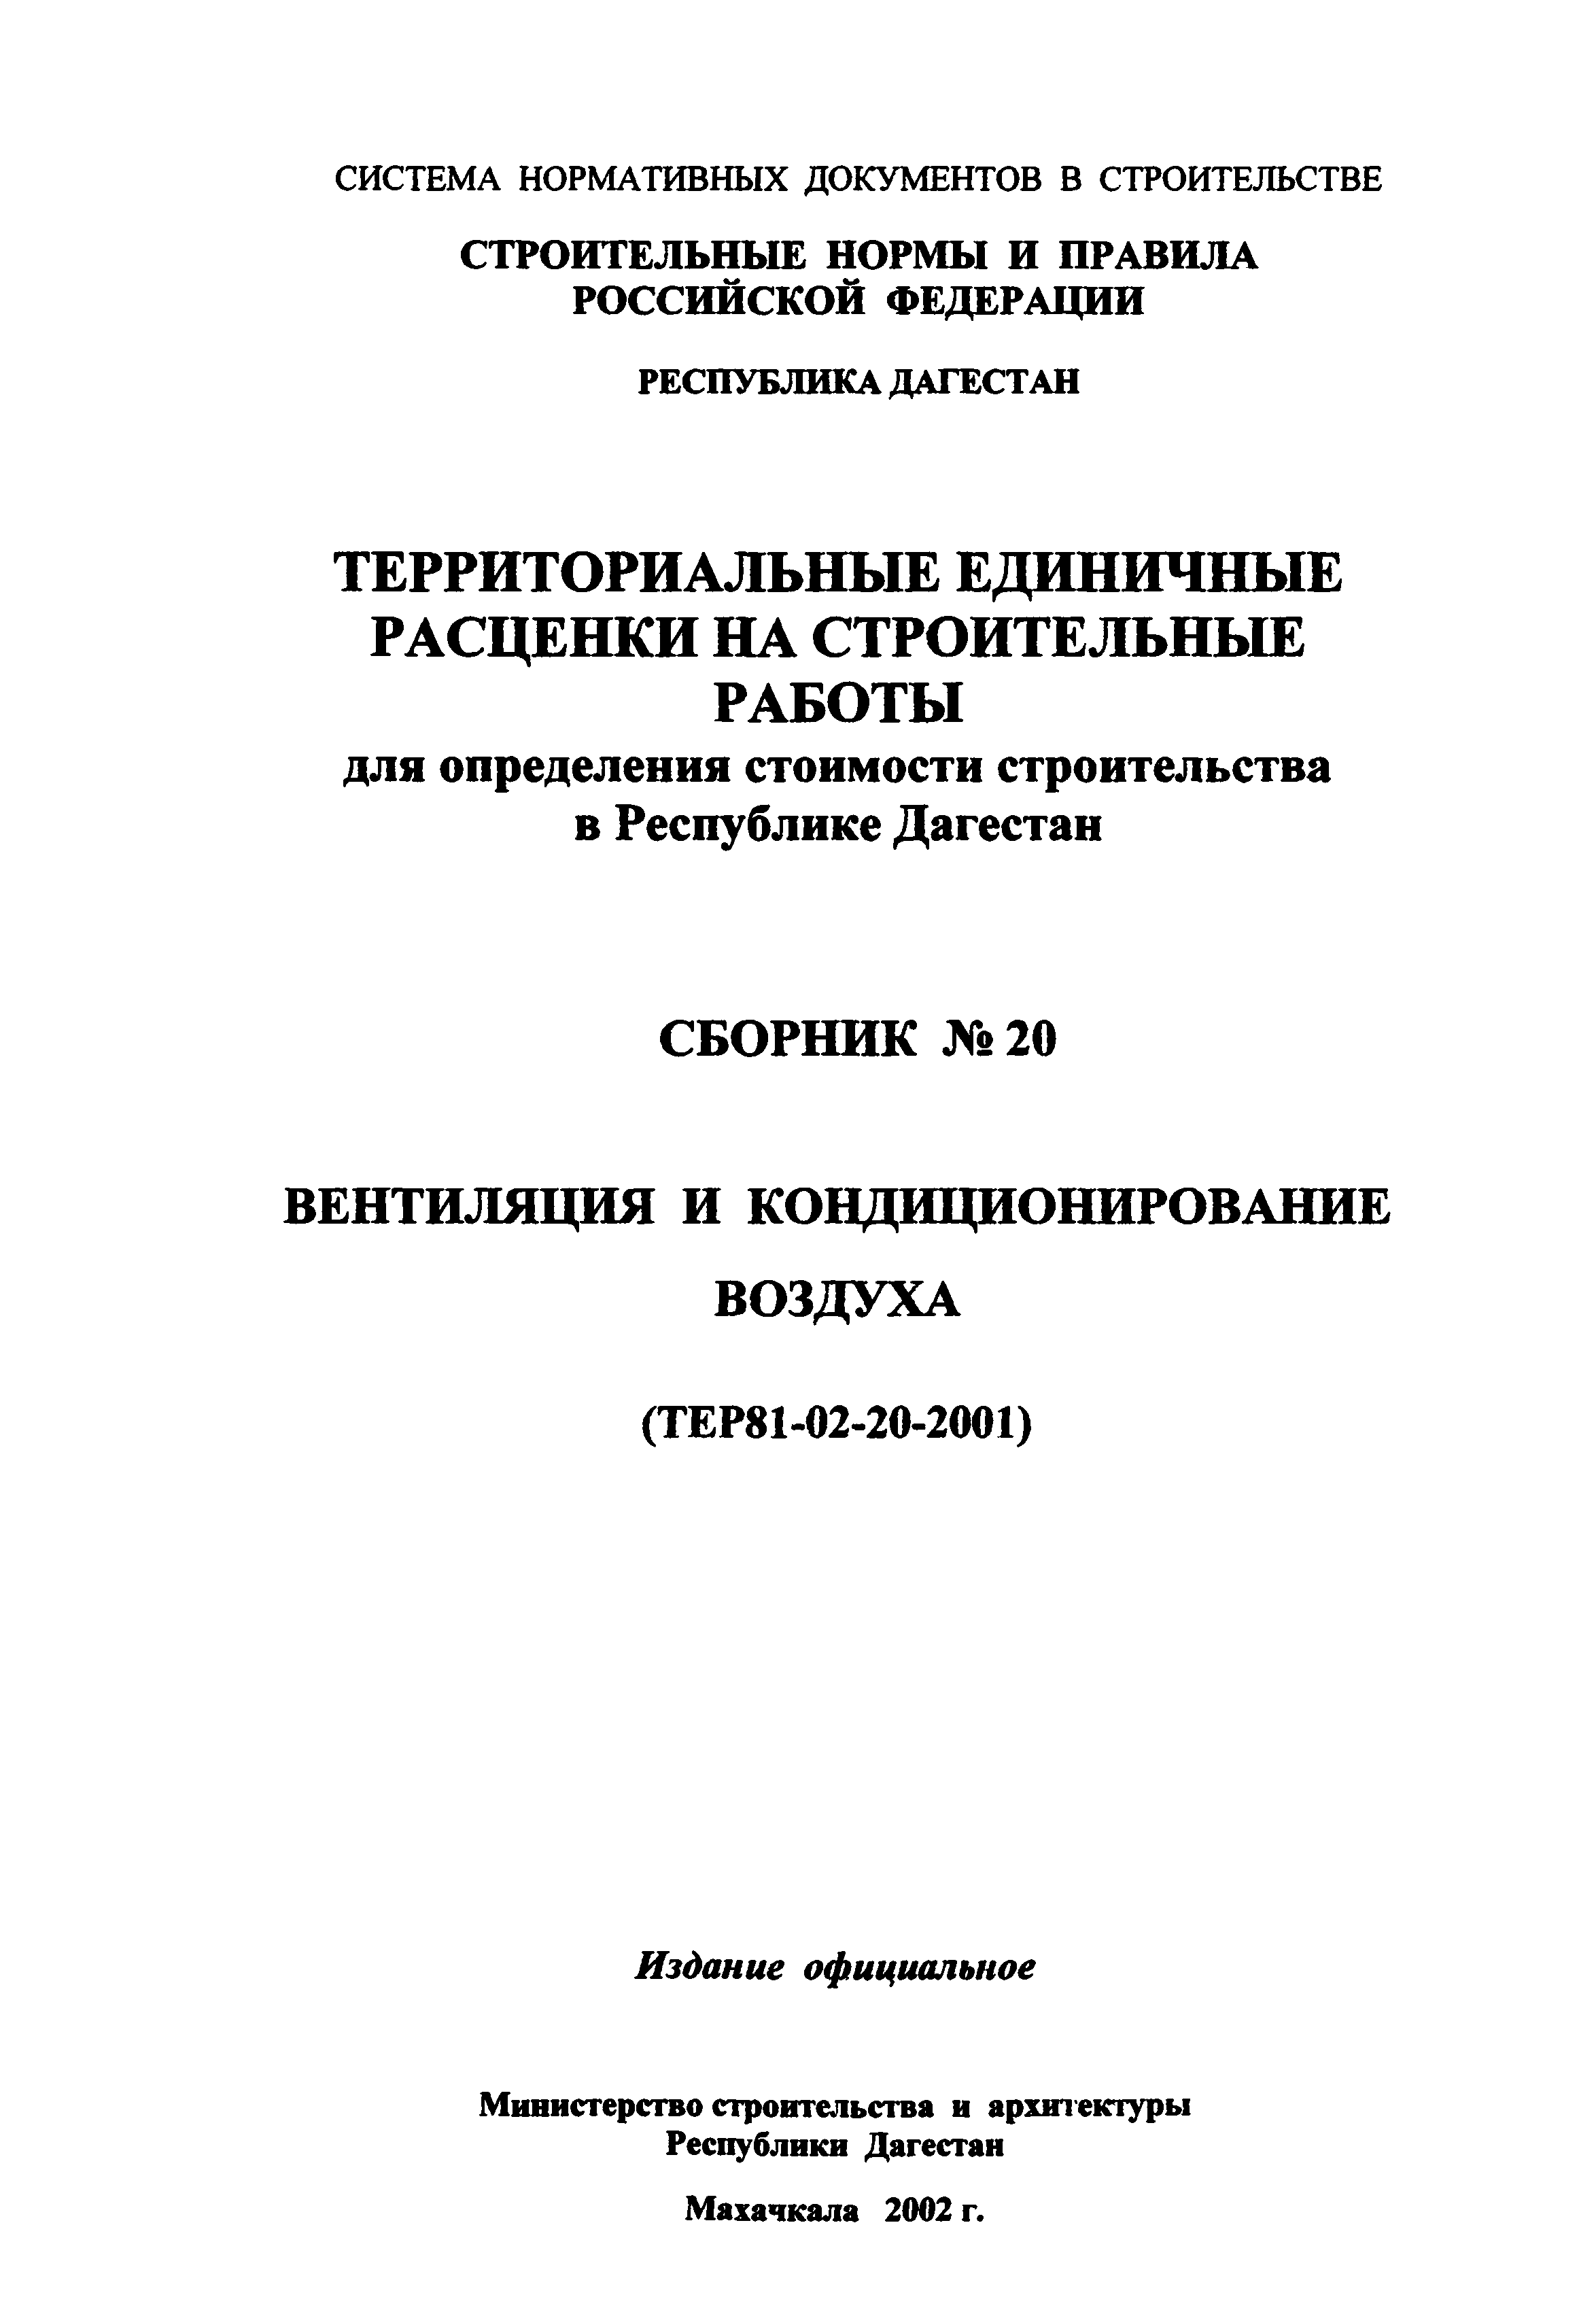 ТЕР Республика Дагестан 2001-20